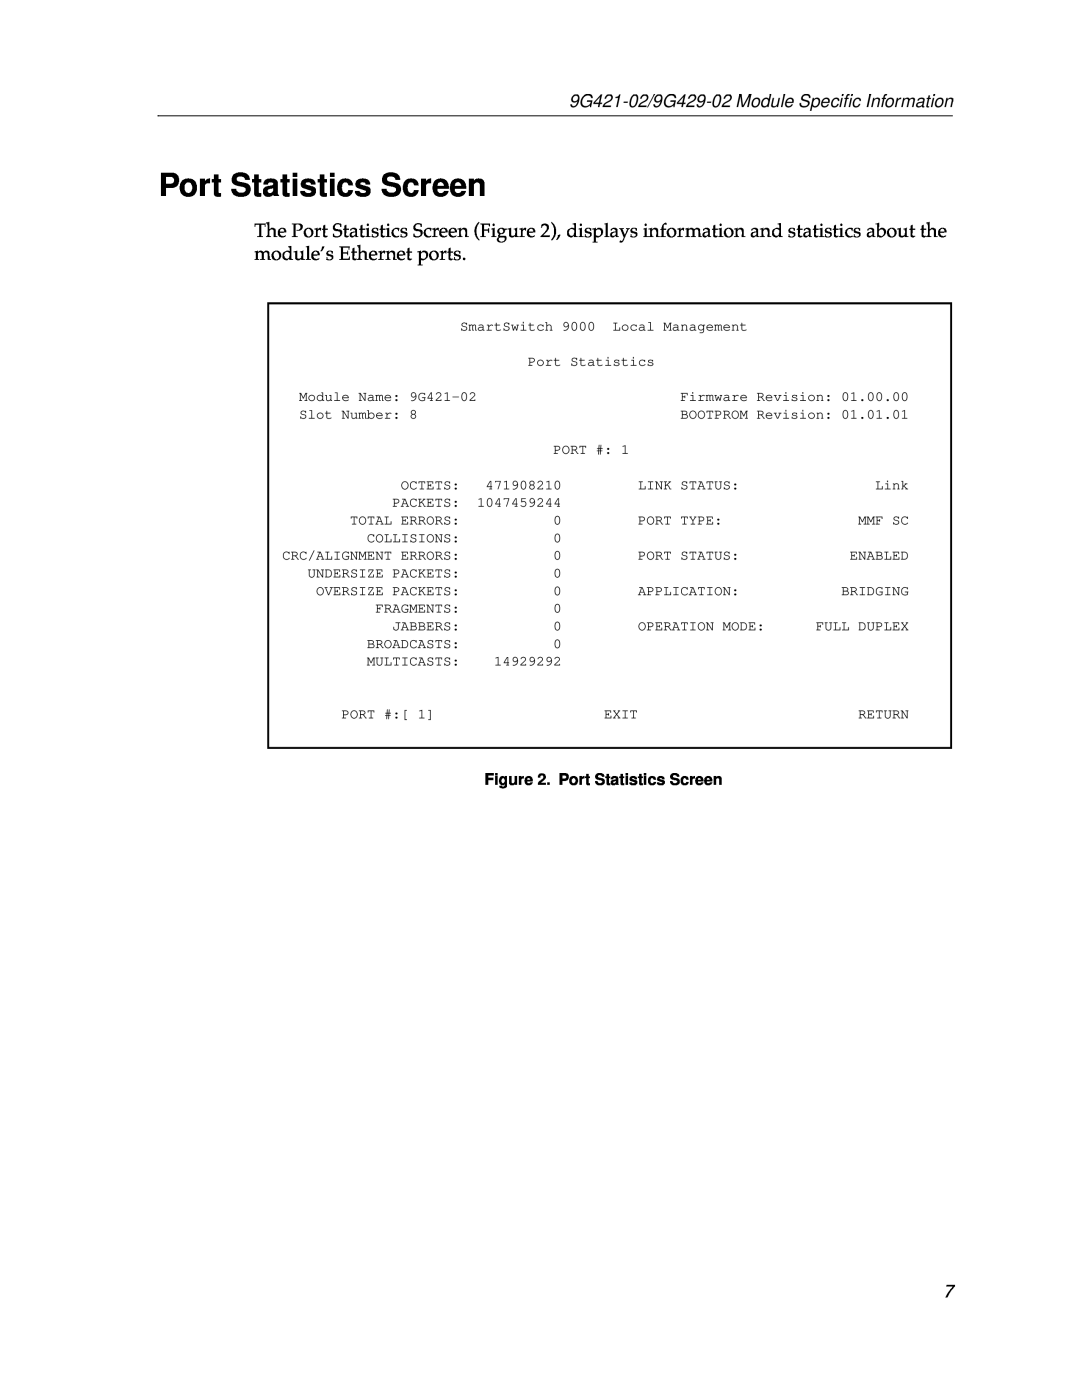 Cabletron Systems appendix Port Statistics Screen, 9G421-02/9G429-02 Module Speciﬁc Information 